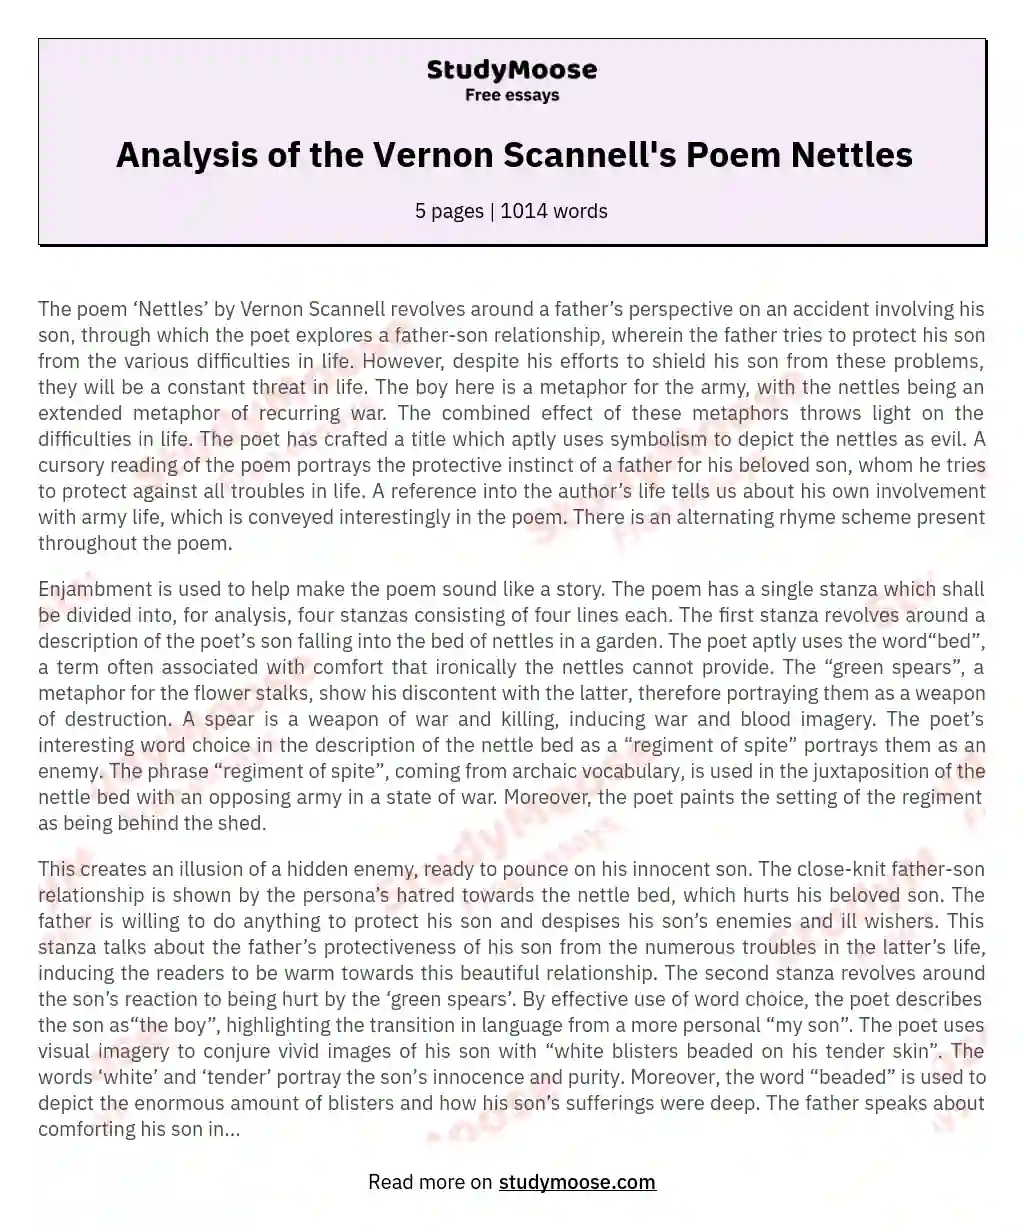 Analysis of the Vernon Scannell's Poem Nettles essay